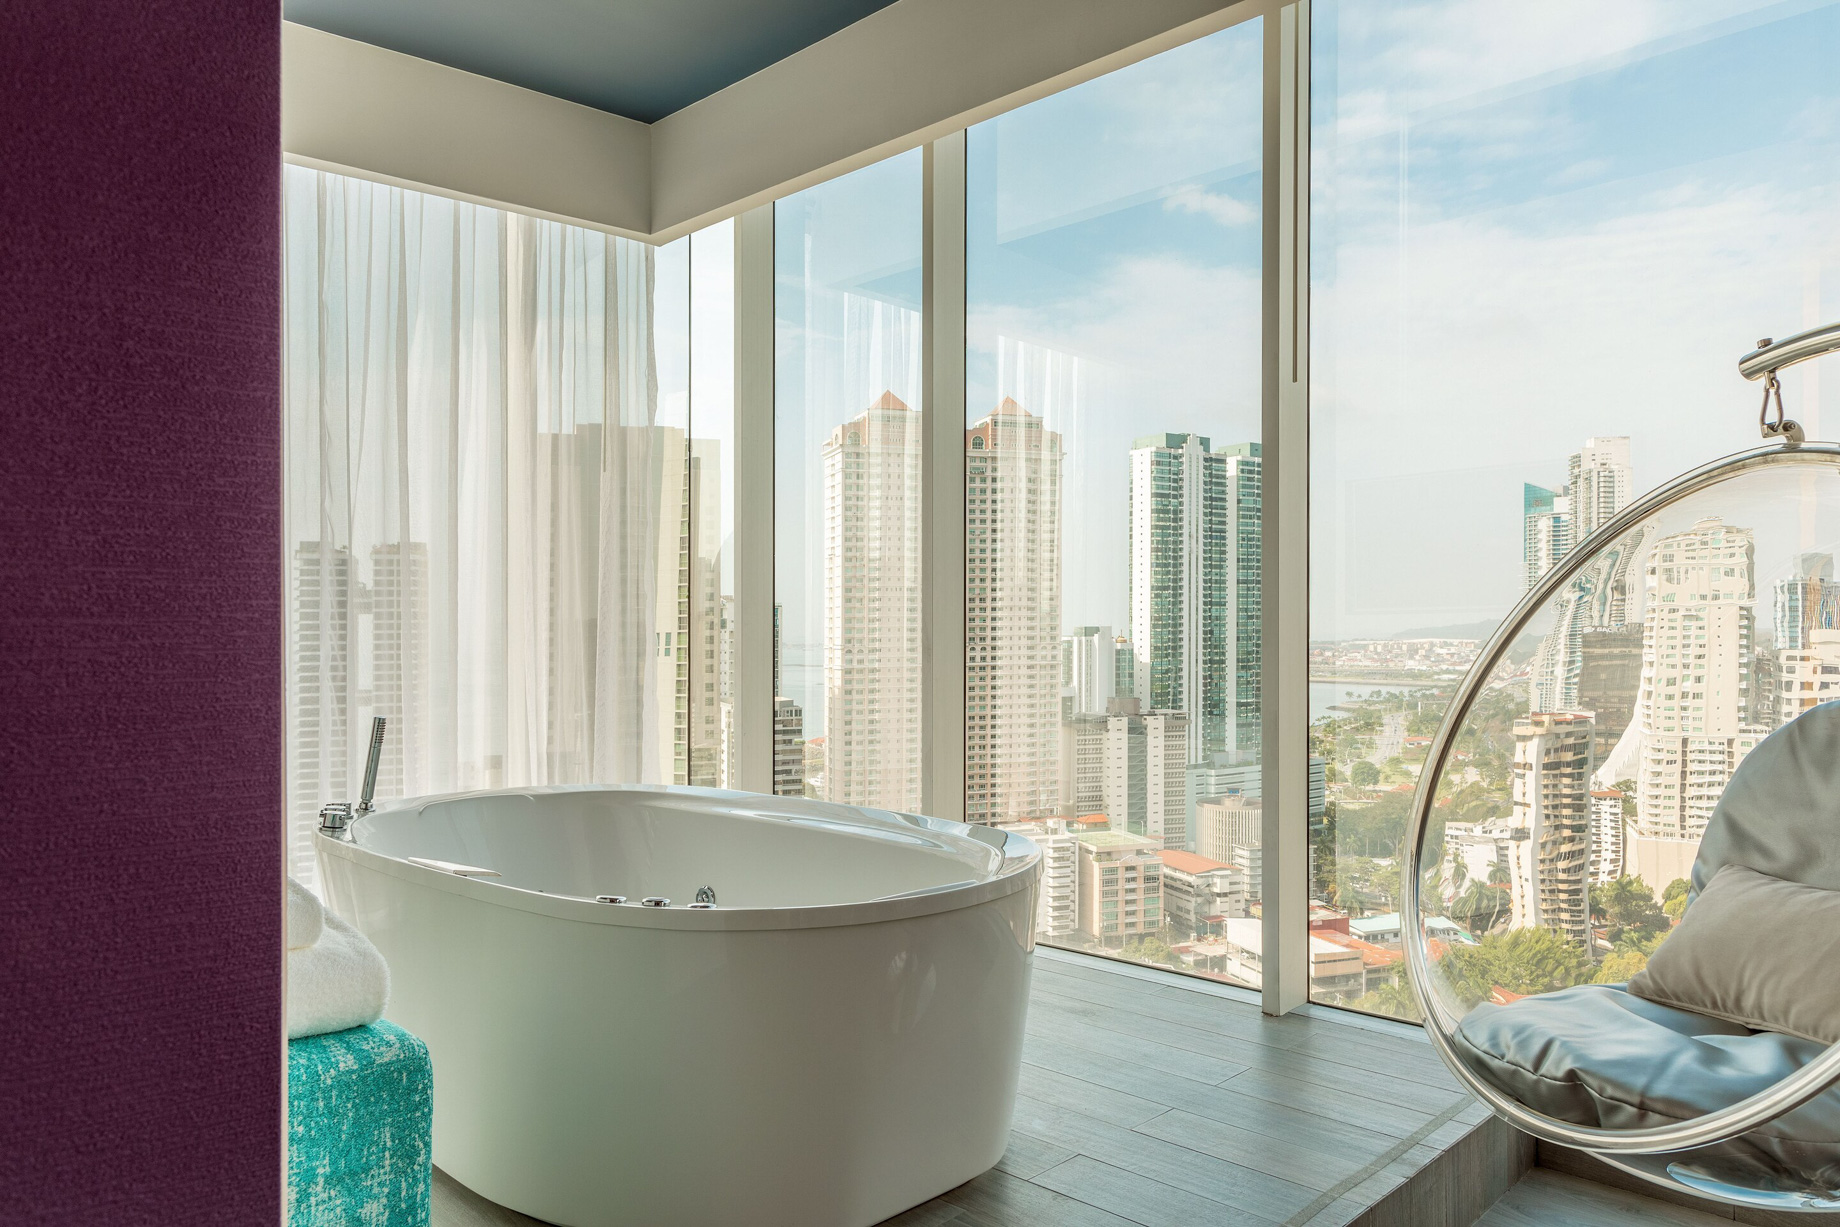 W Panama Hotel - Panama City, Panama - Suite Bathroom Tub View